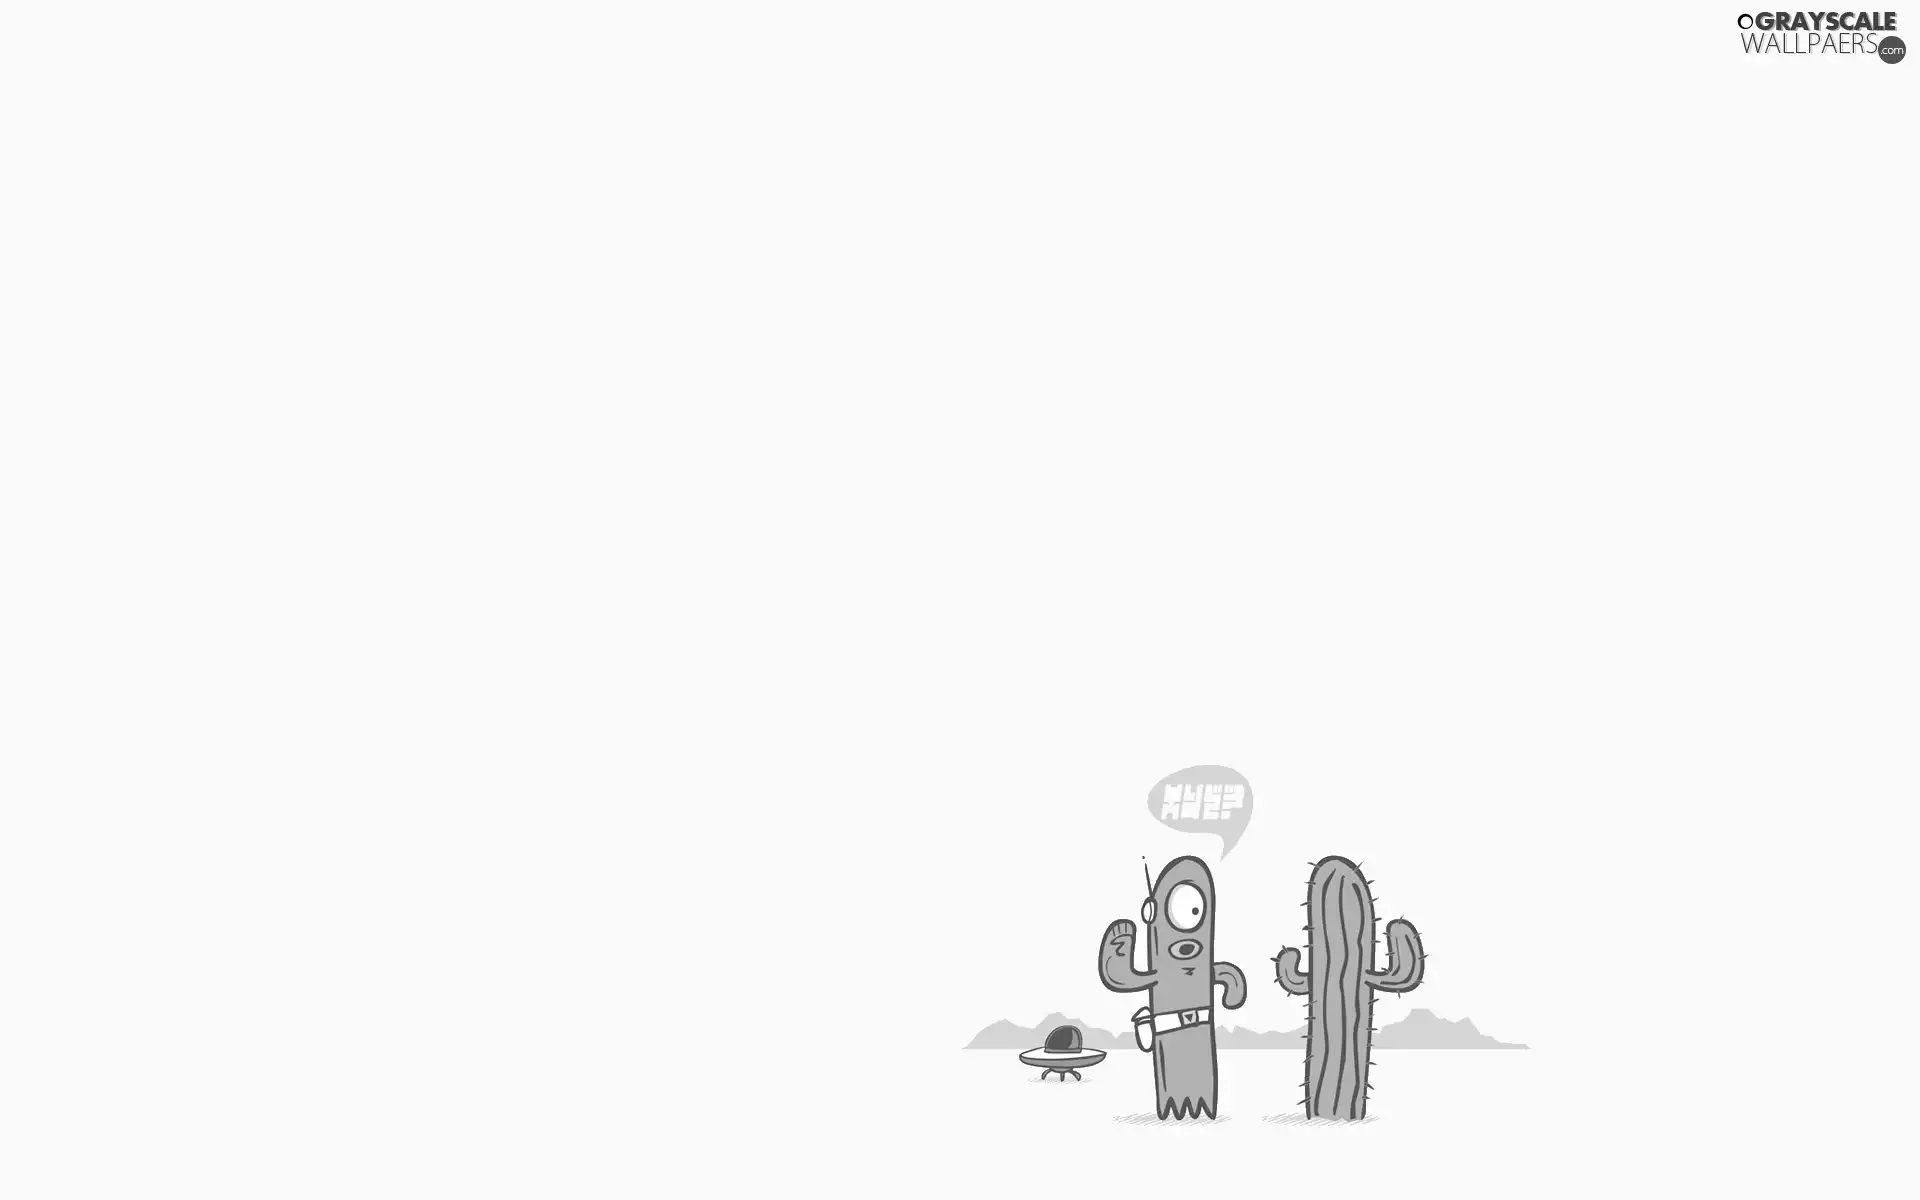 saucer, Cactus, alien